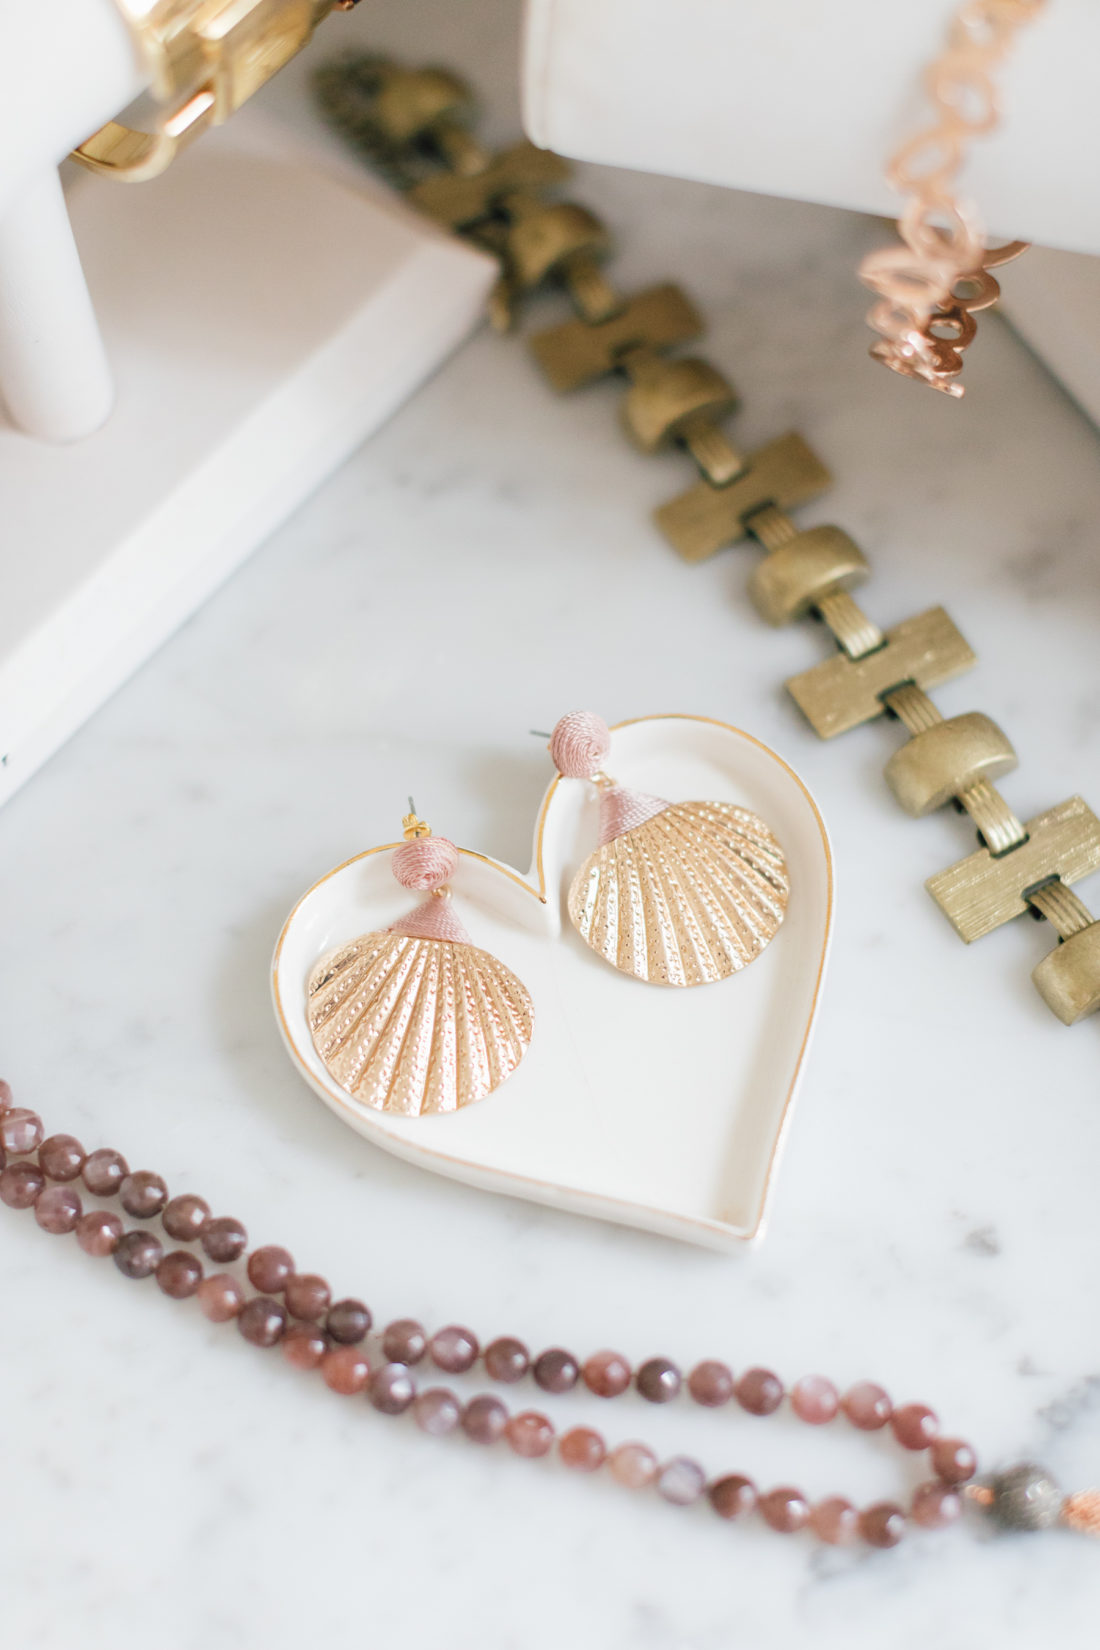 Eva Amurri Martino's delicate shell earrings